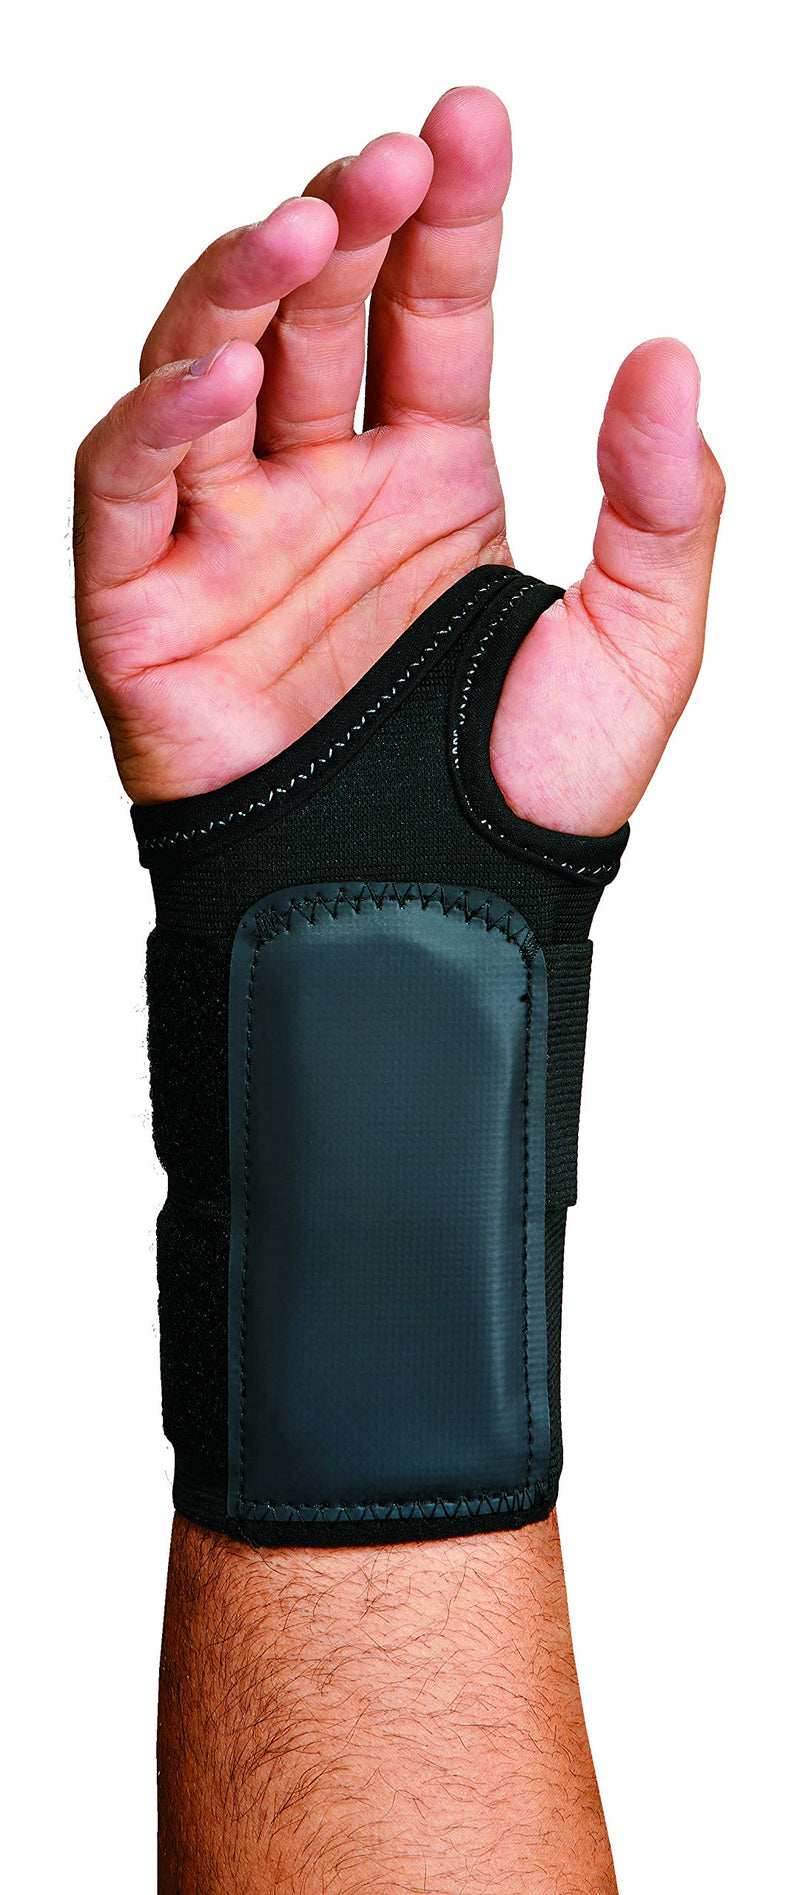 [Australia] - Ergodyne ProFlex 4010 Double-Strap Right Wrist Support, Black, Medium 